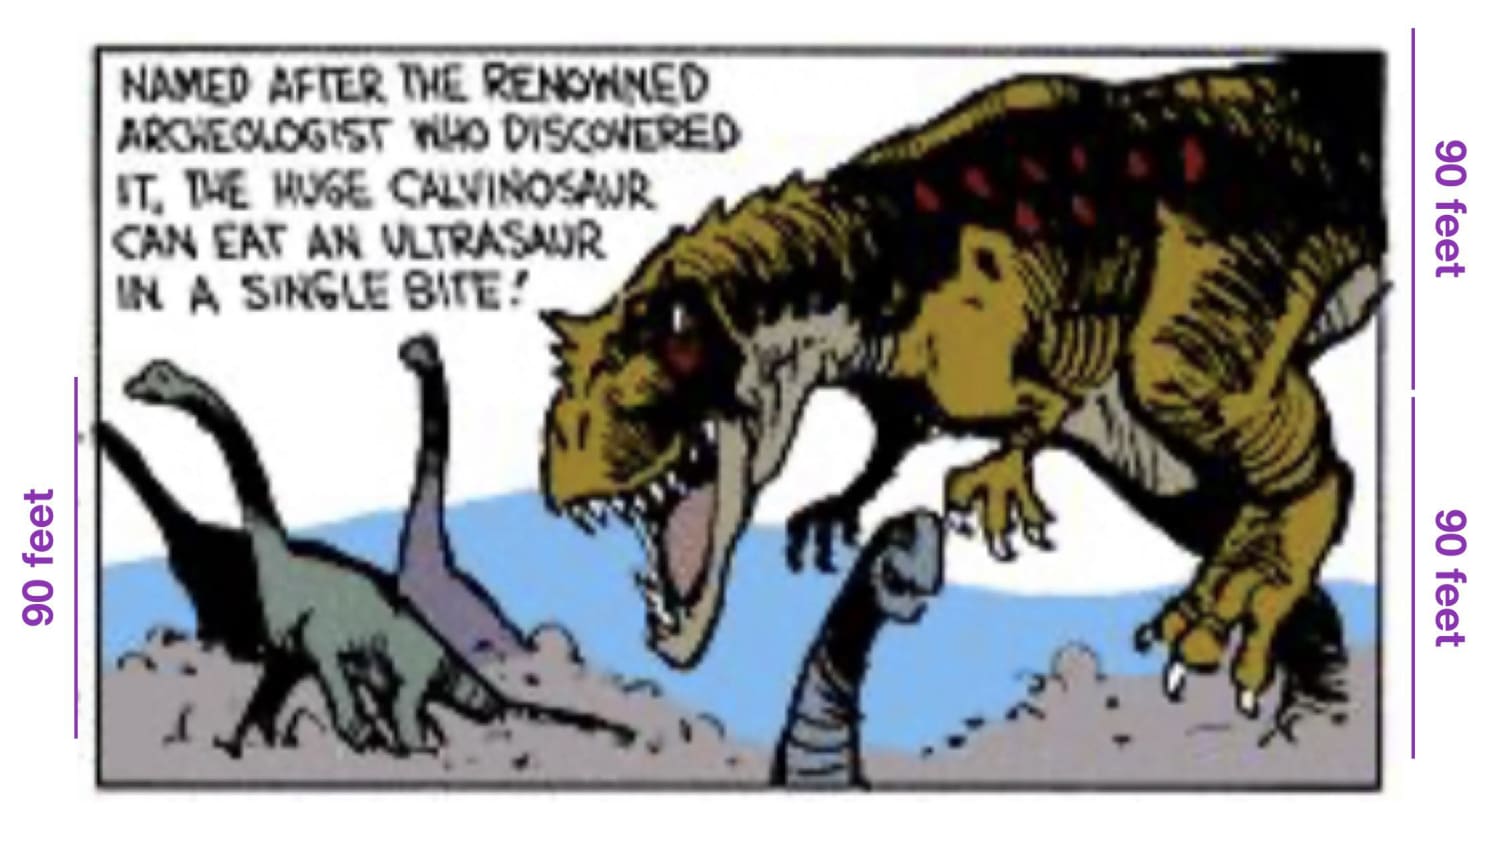 The Calvinosaur is about 180 feet tall